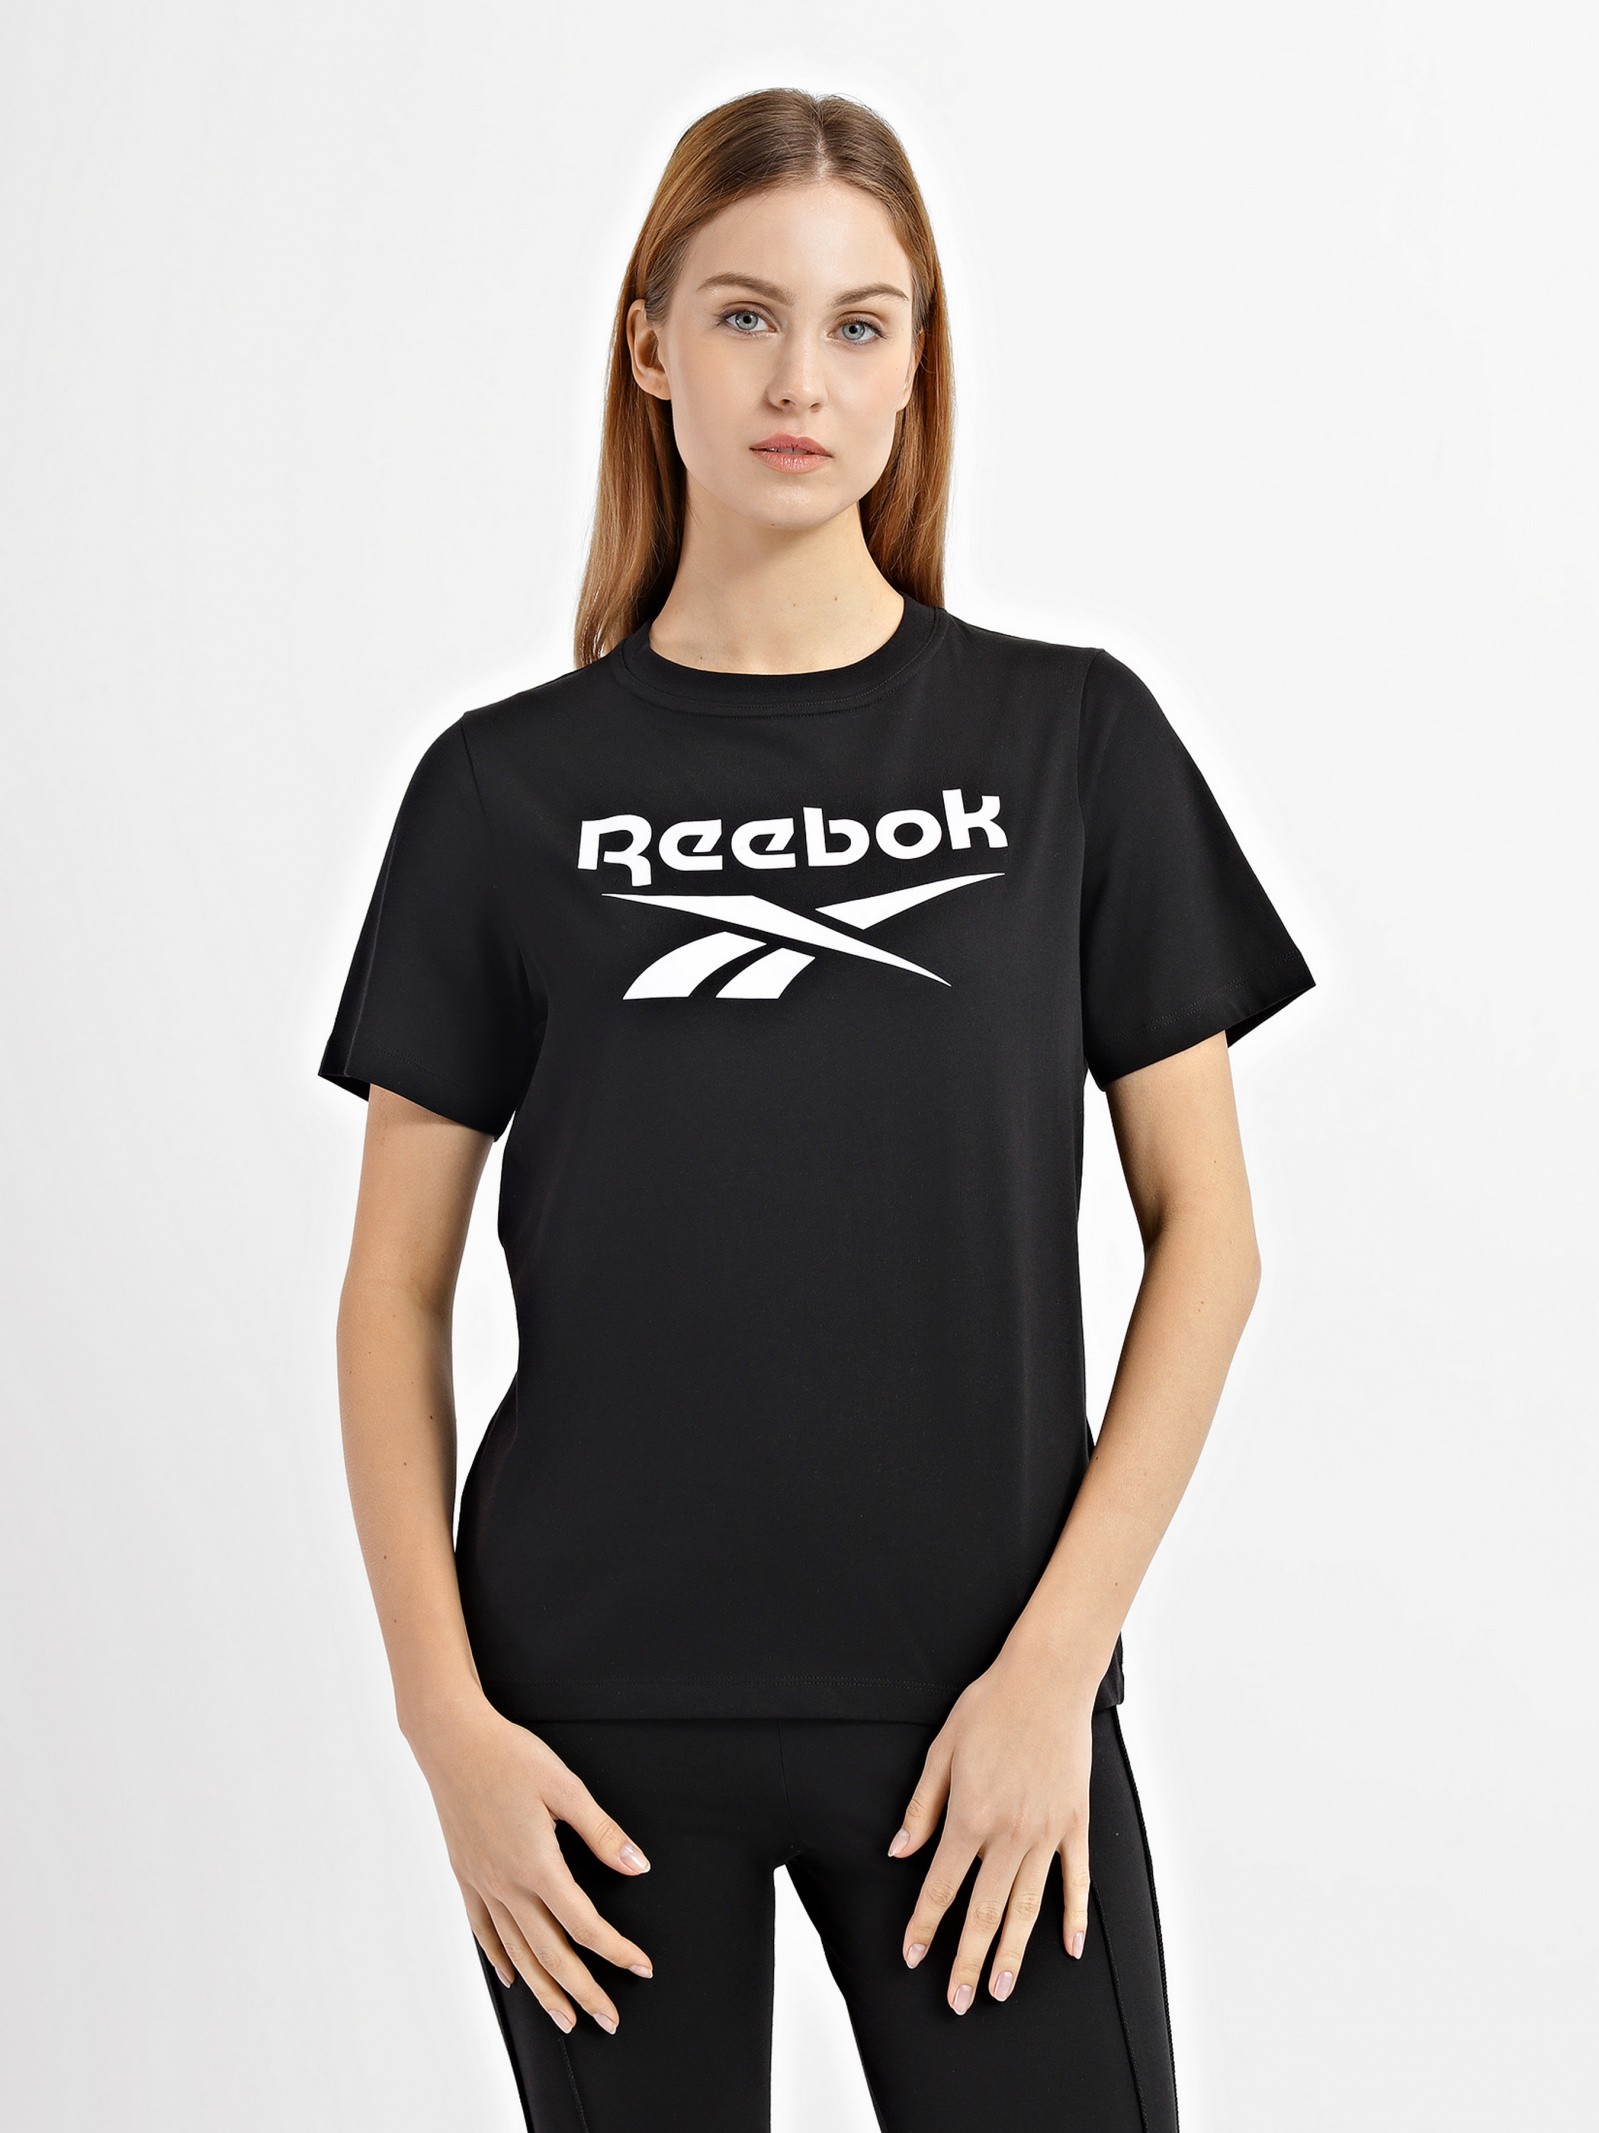 Reebok Ri Ble Tee Women\'s T-Shirt HB2271